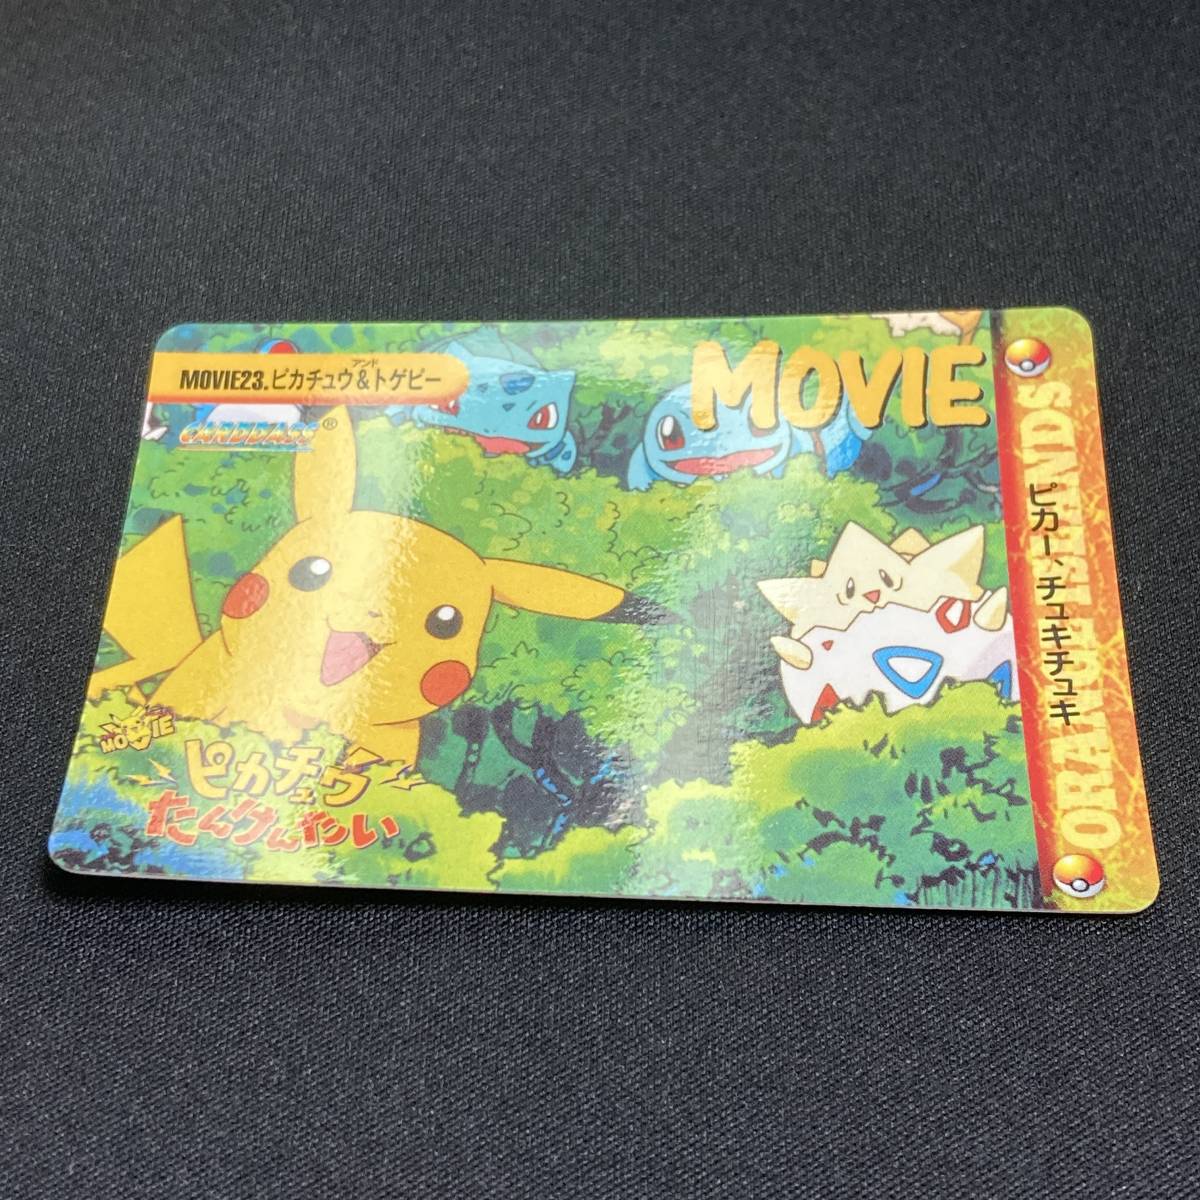 Togepi Squirtle Pikachu Movie23 Carddass Anime Series Pokemon Card Japanese ポケモン カードダス ピカチュウ＆トゲピー ポケカ 220212_画像2